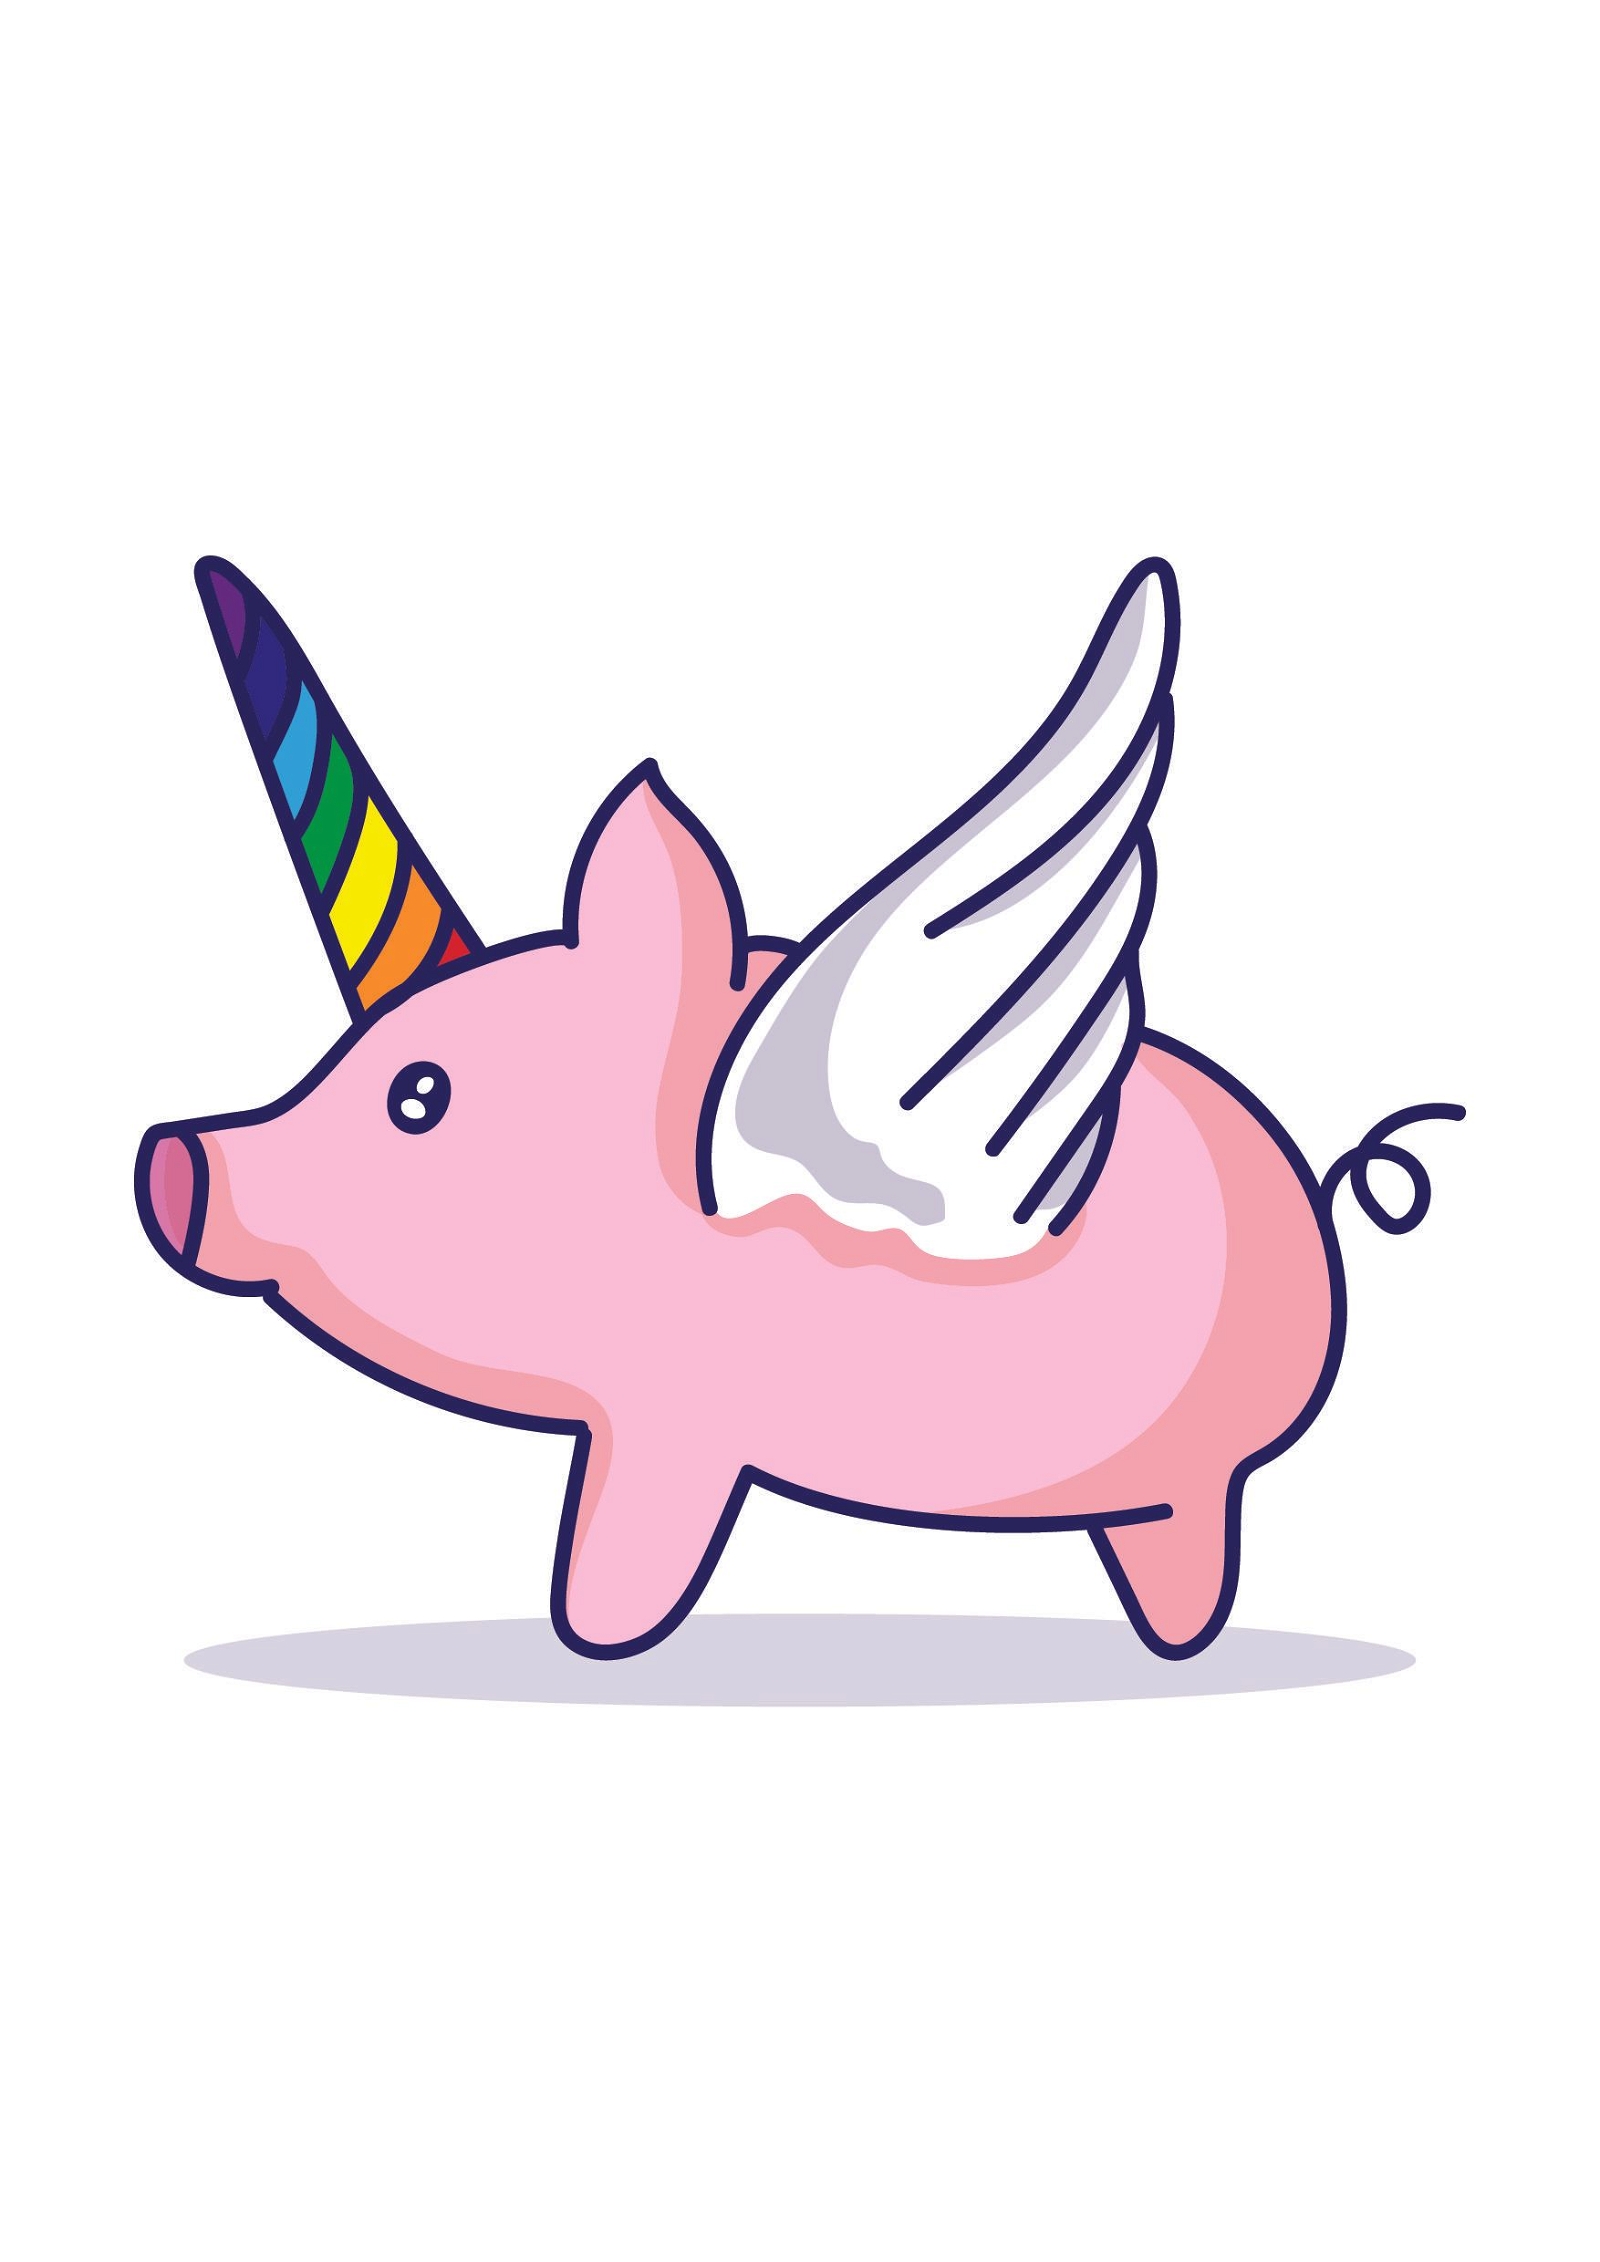 Pig unicorn cartoon